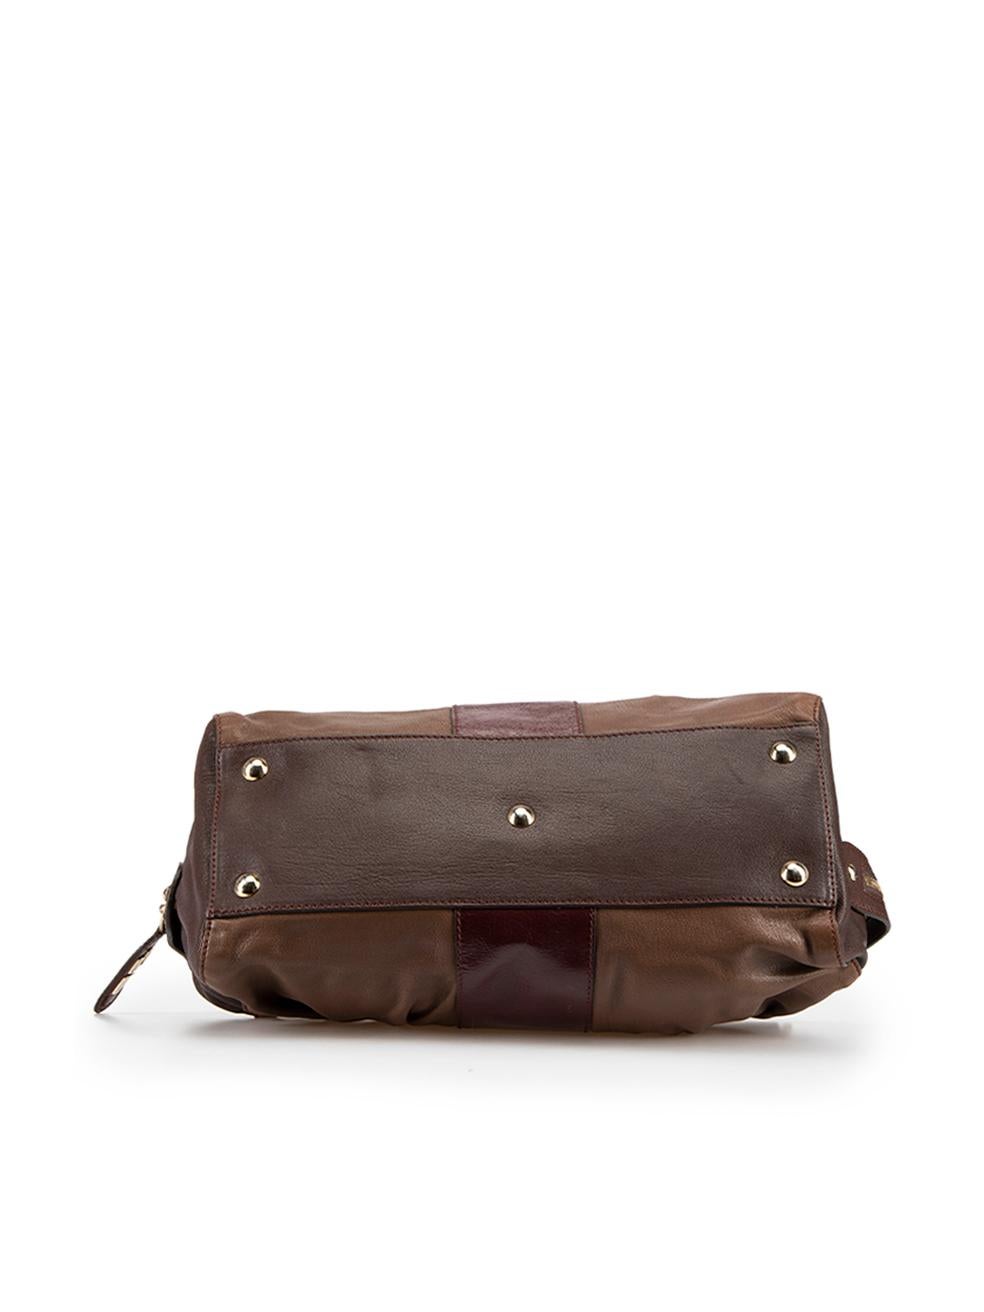 Women's Etro Brown Leather Shoulder Bag For Sale